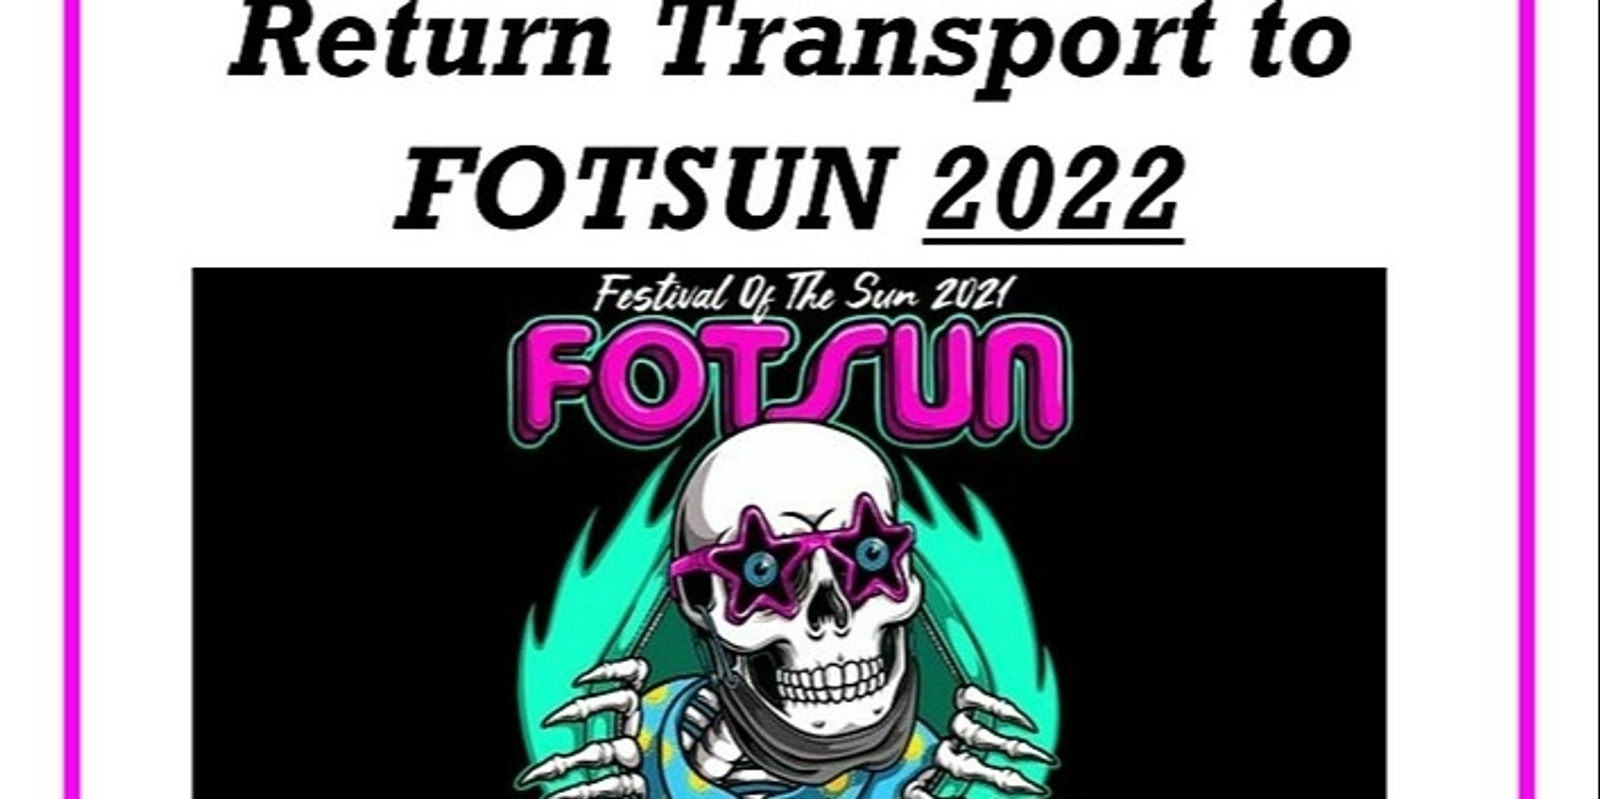 Transport to FOTSUN 2022